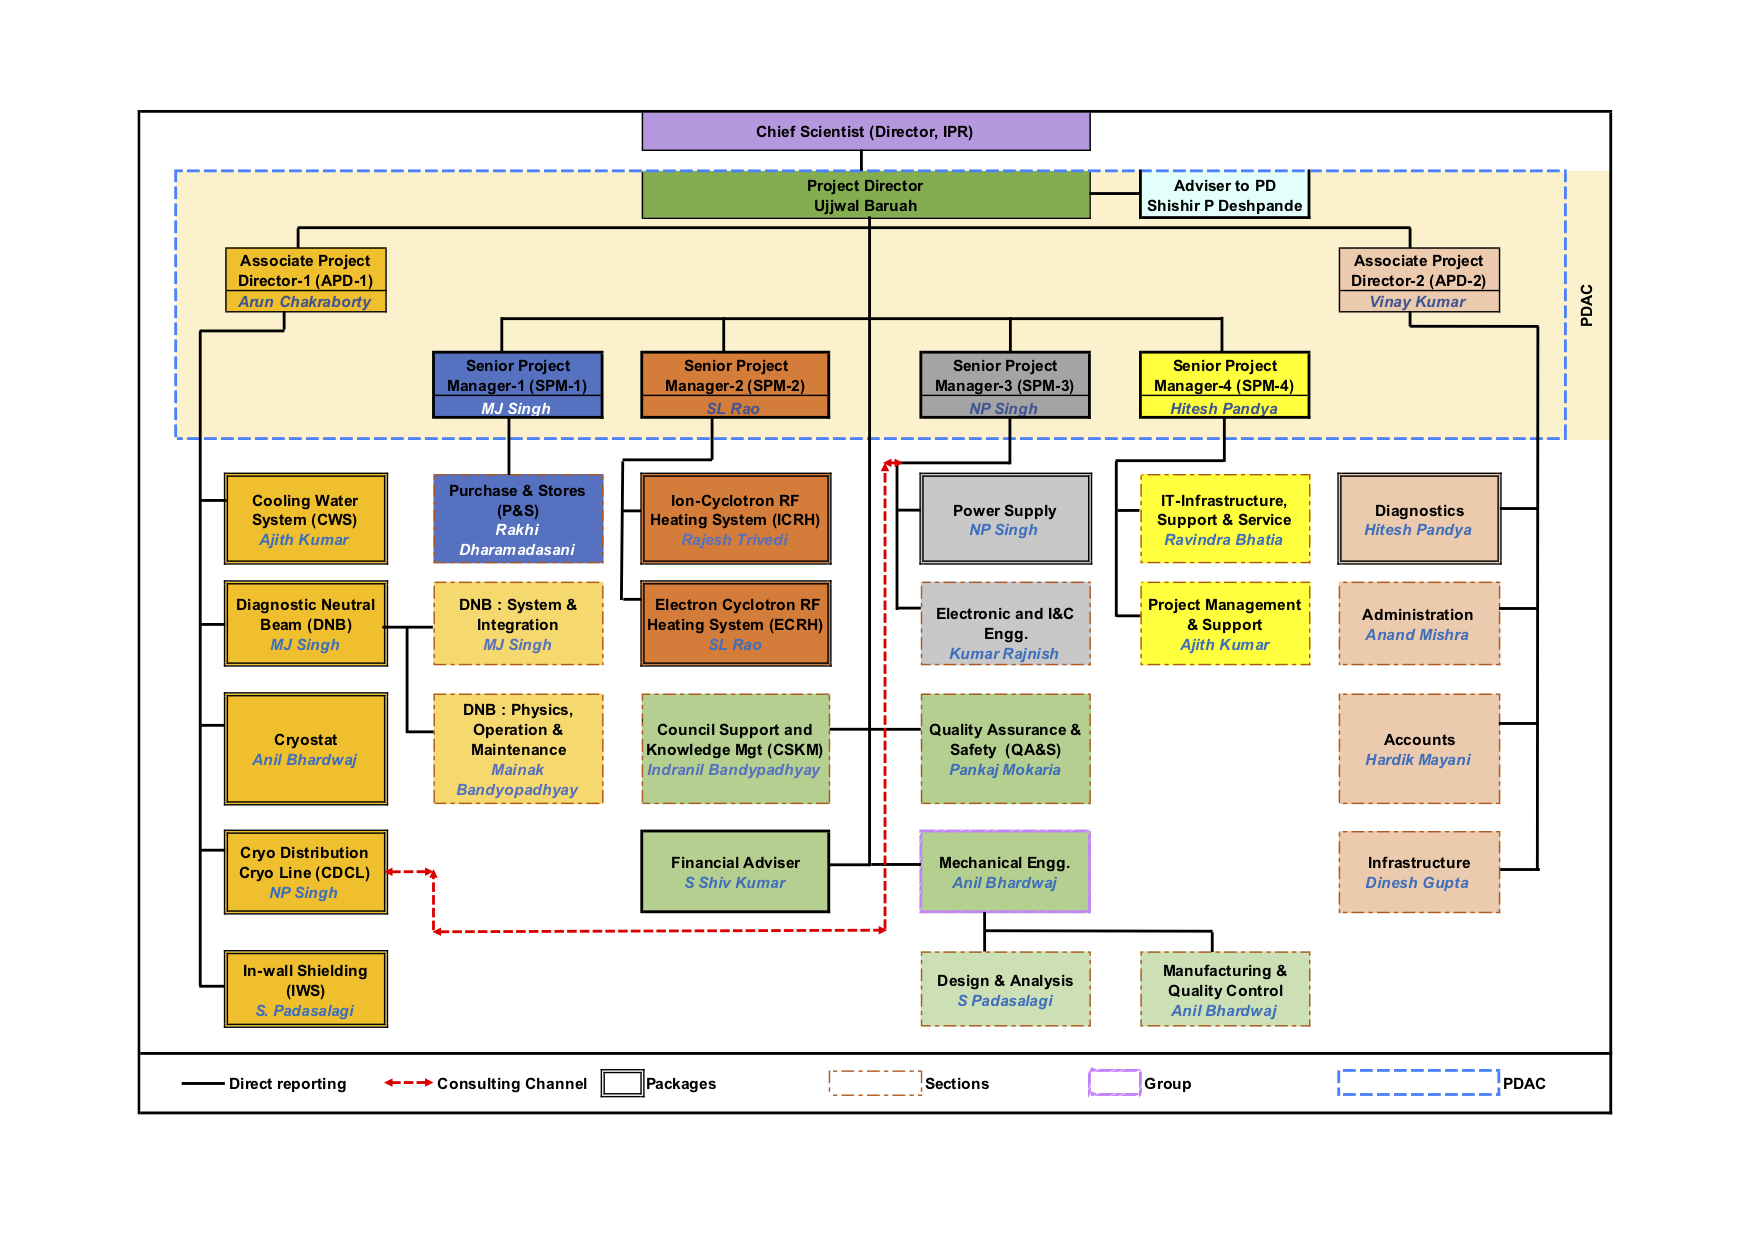 Organisation Chart v5